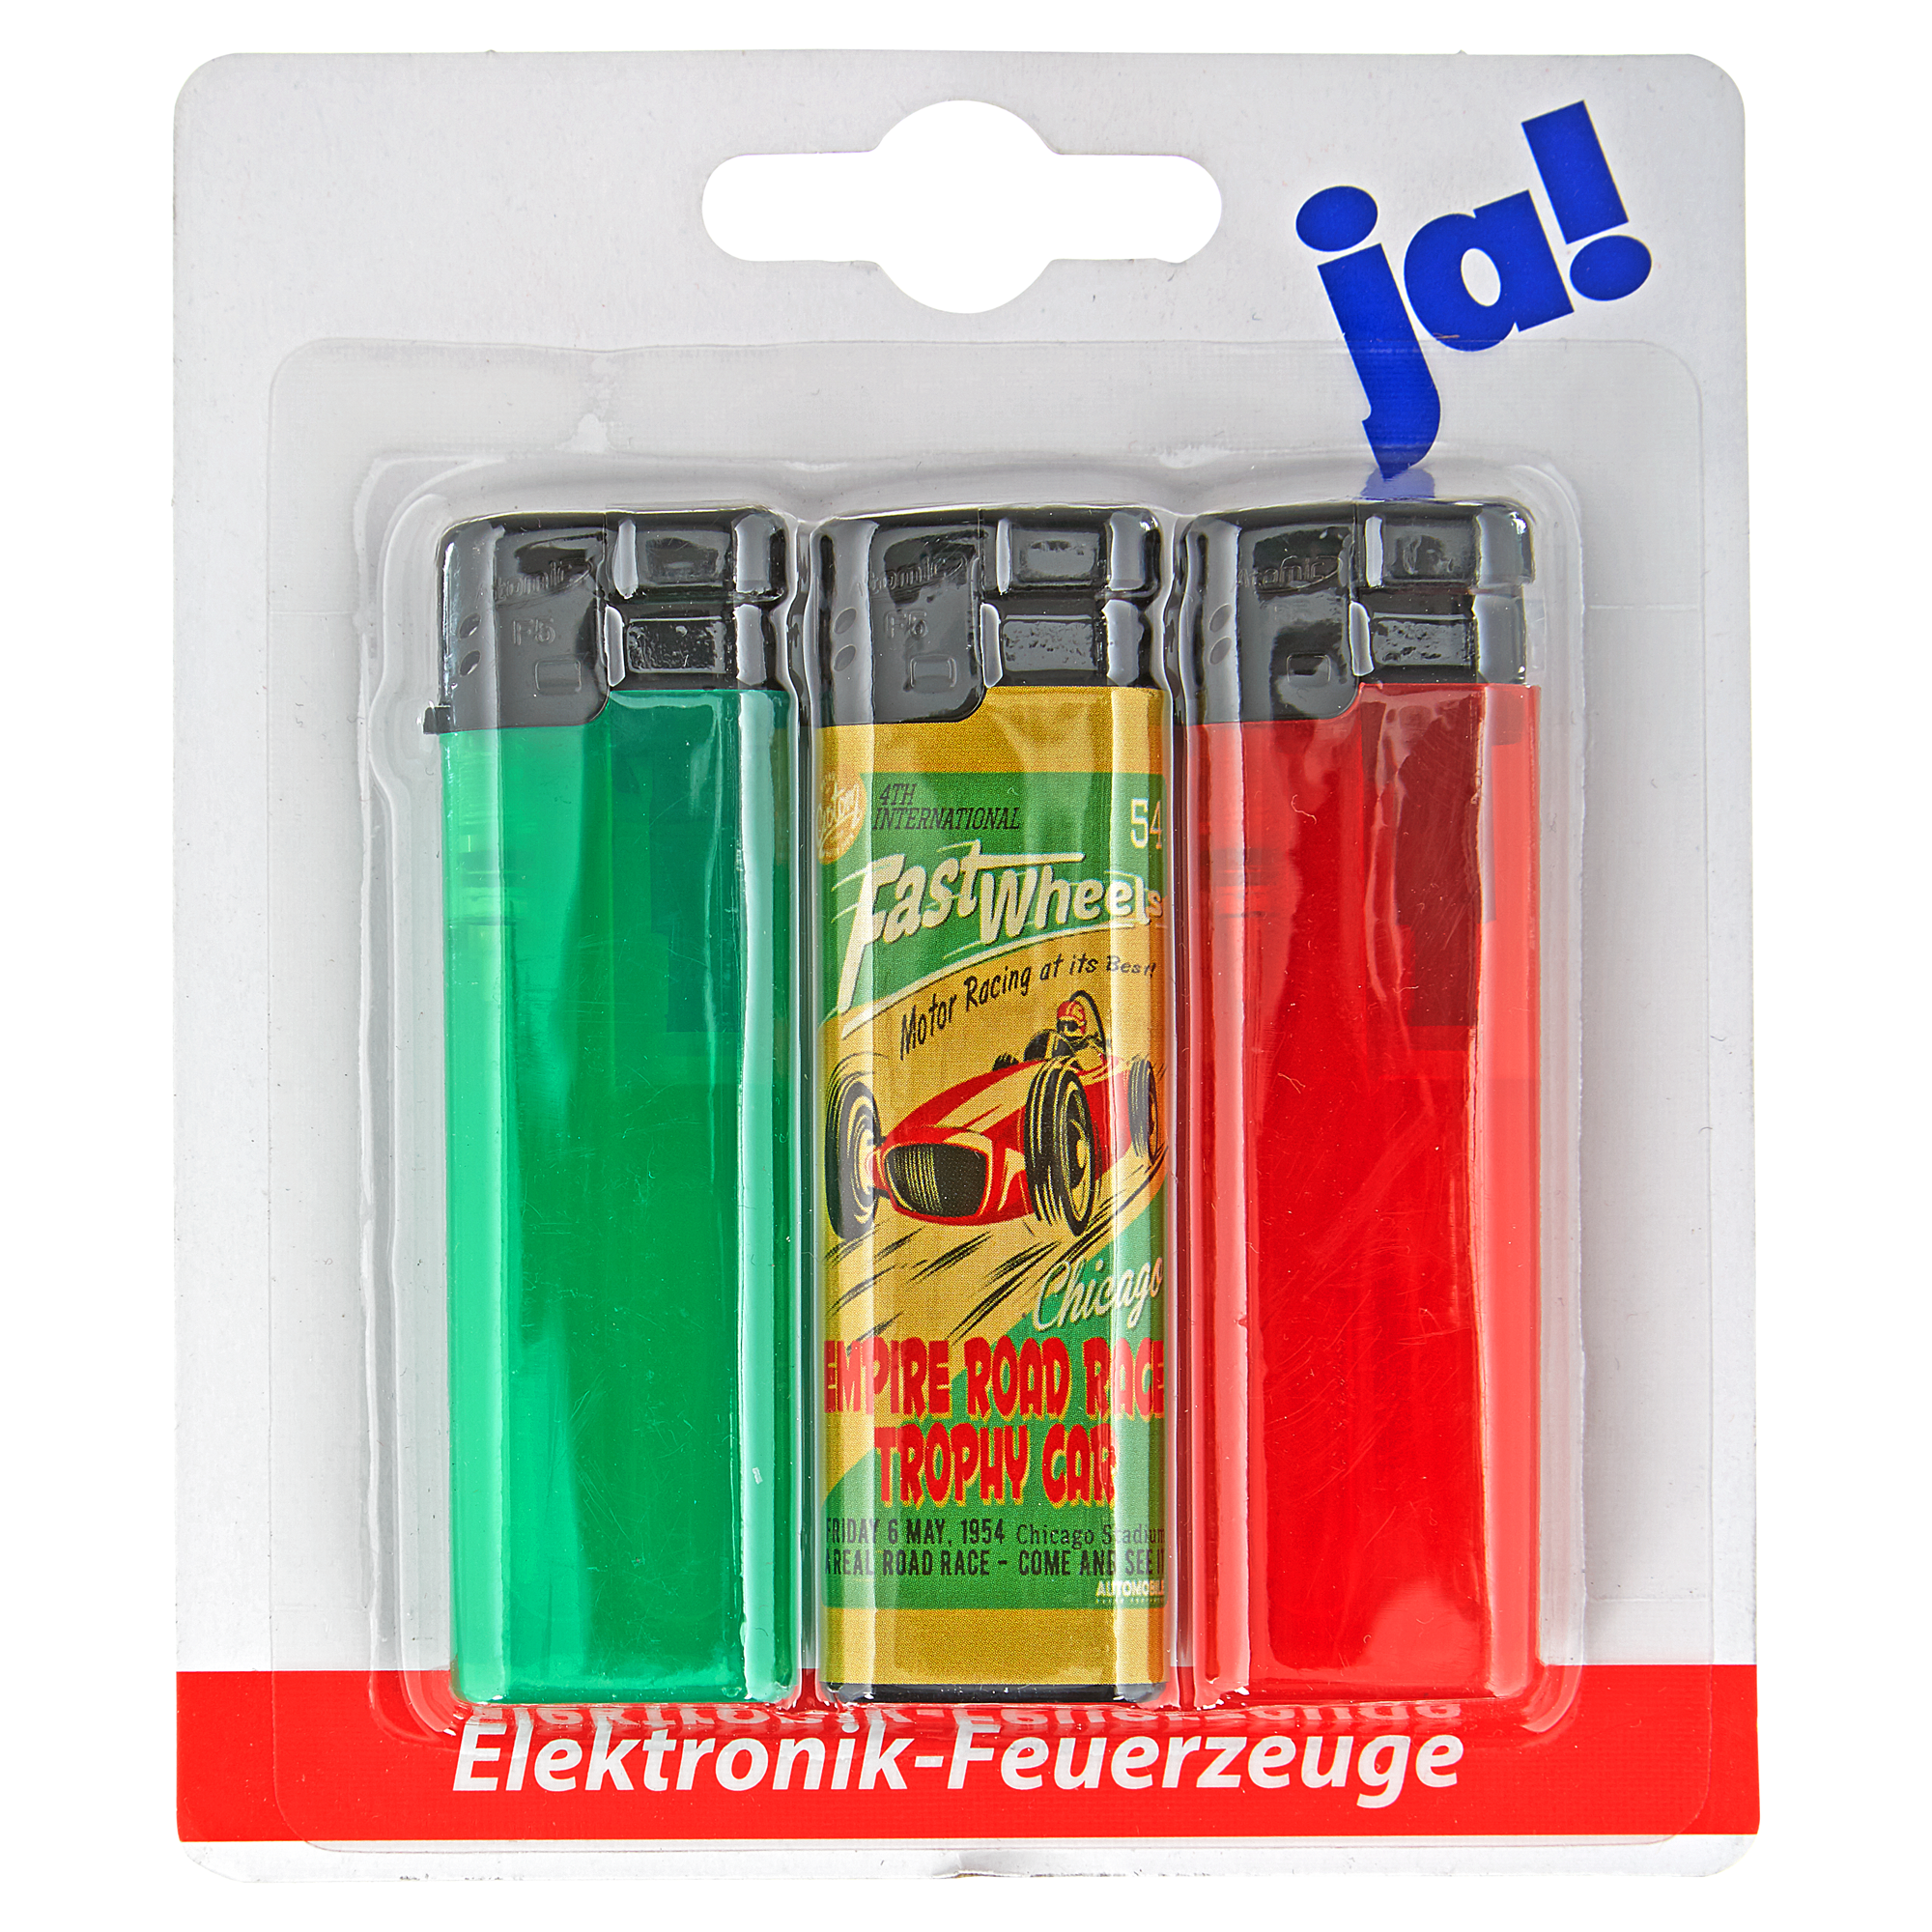 Elektronik-Feuerzeuge mehrfarbig + product picture